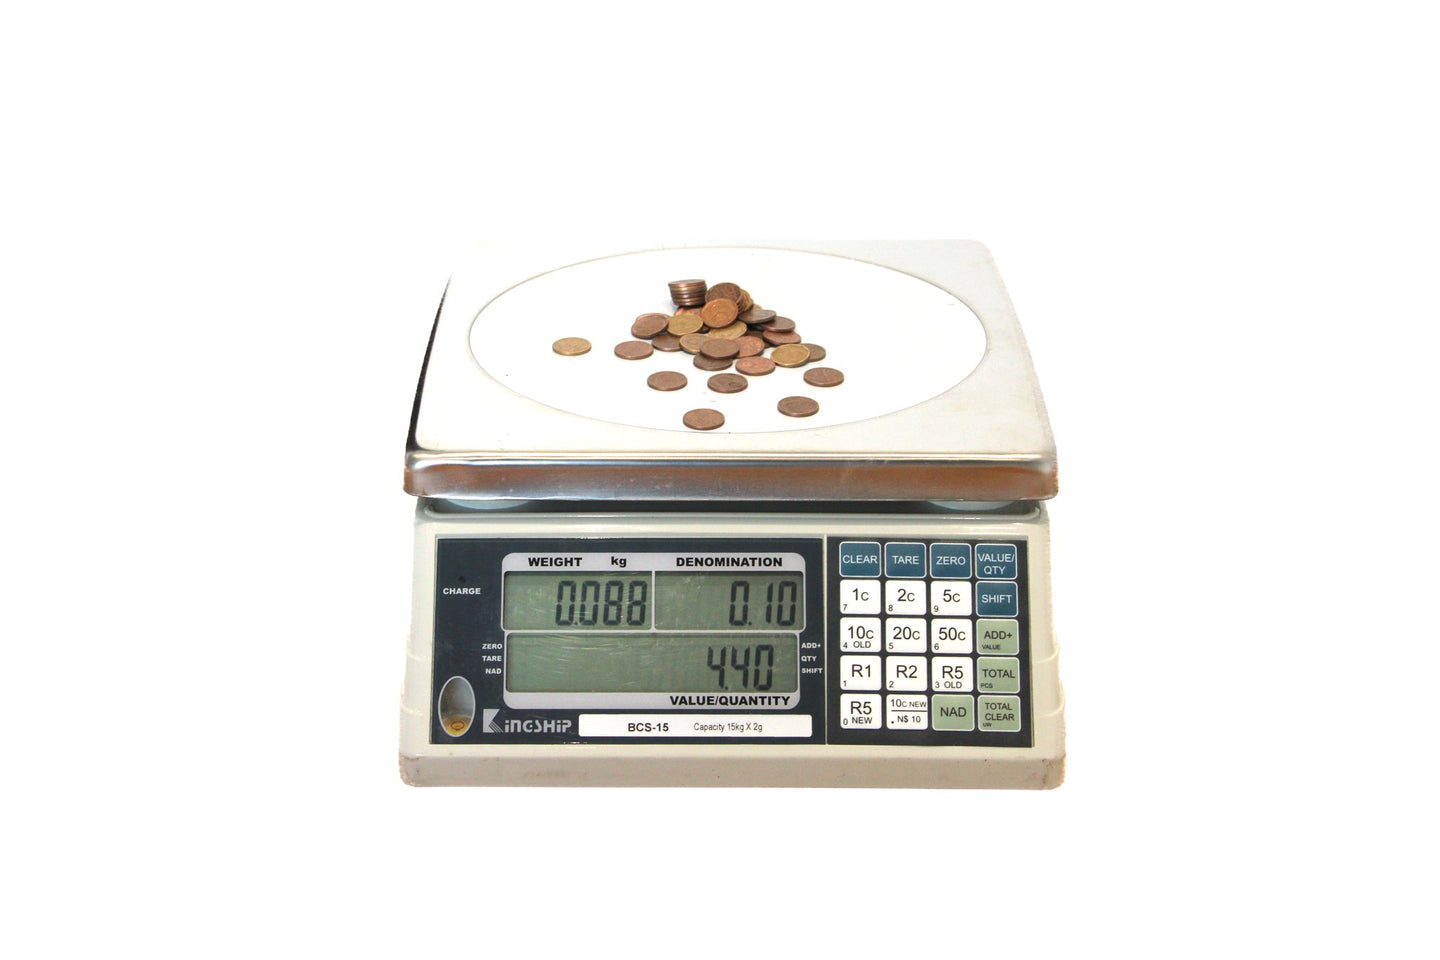 AVANSA BulkCoin Scale 4600 Coin Counter - My Store